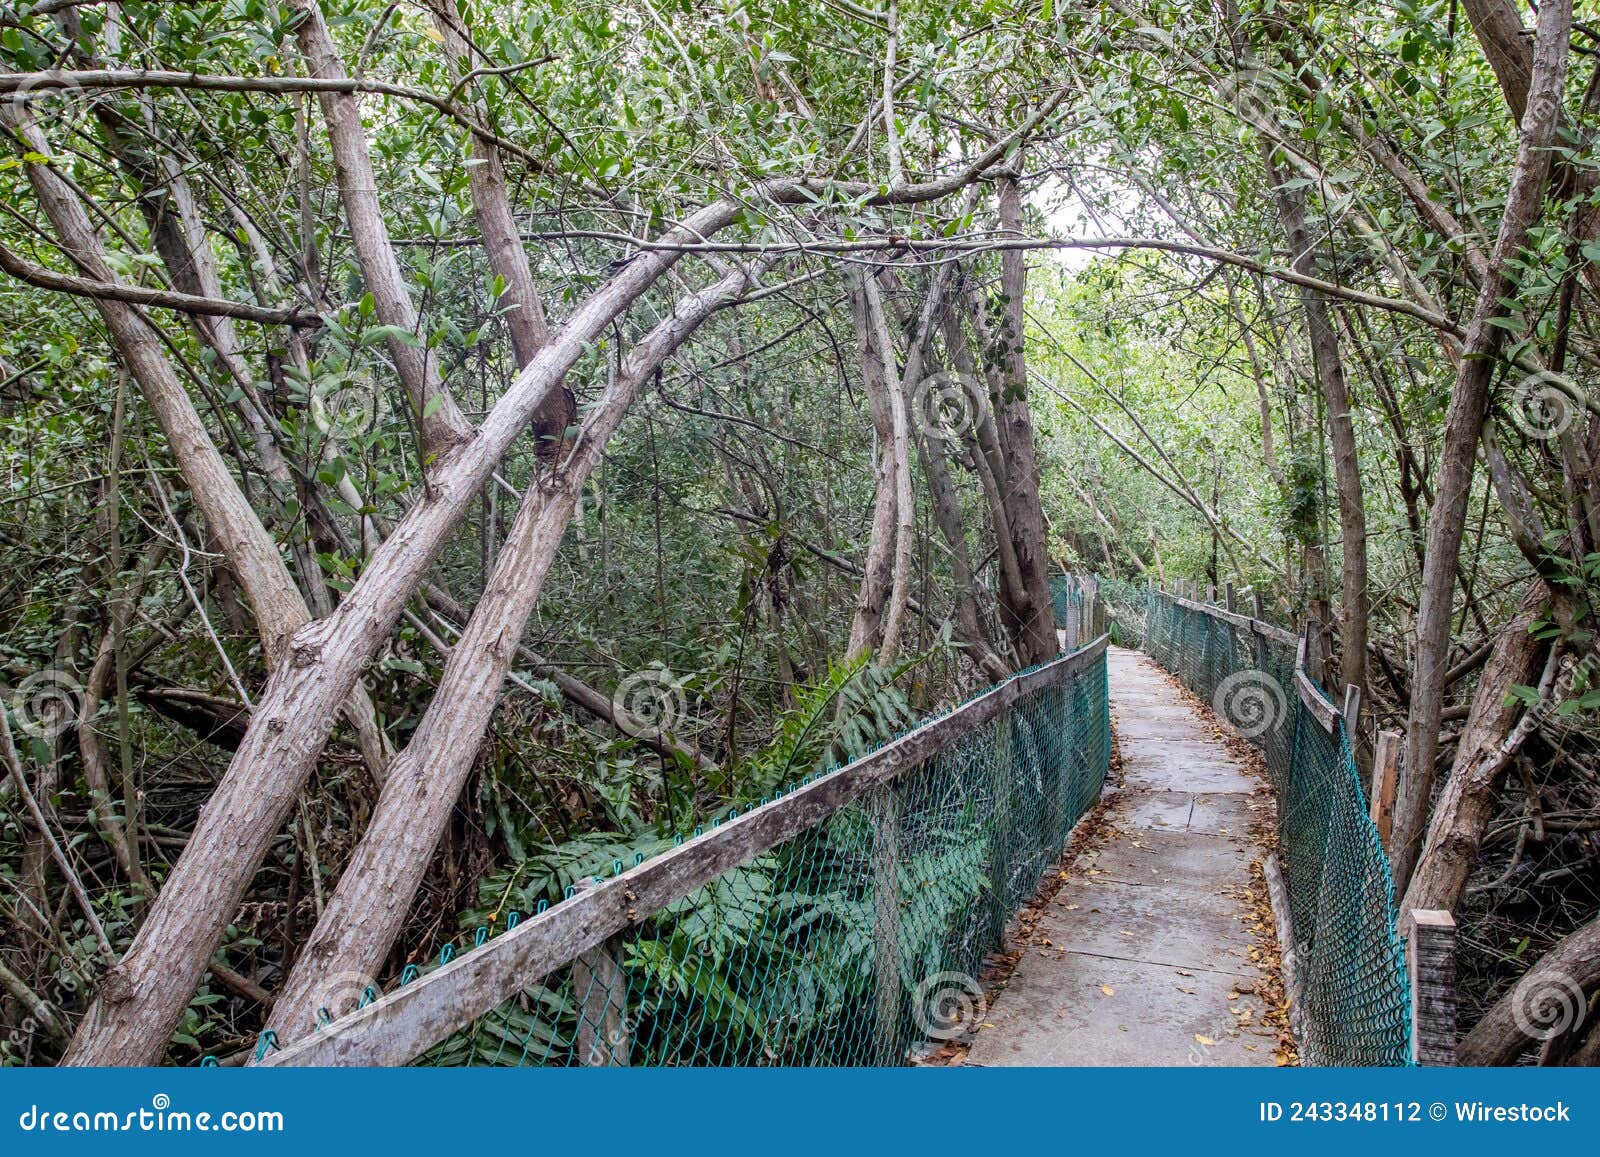 walking path going through green leaved trees in cocodrilario la manzanilla, jalisco, mexico